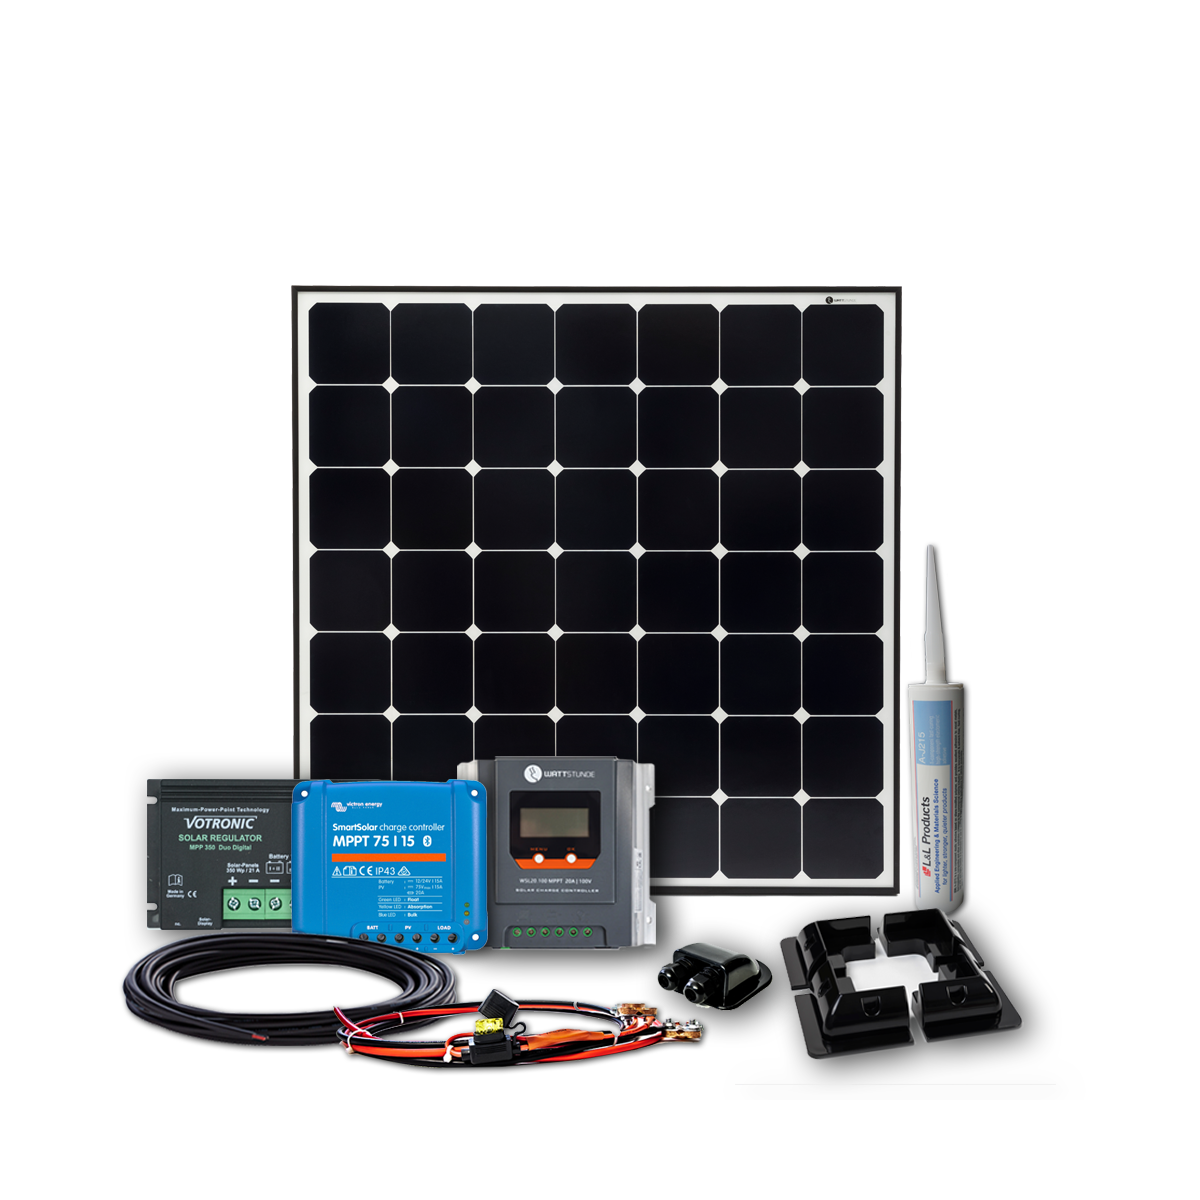 https://solarkontor.de/media/image/product/8145/lg/daylight-sunpower-190wp-wohnmobil-solaranlage-dls190.png